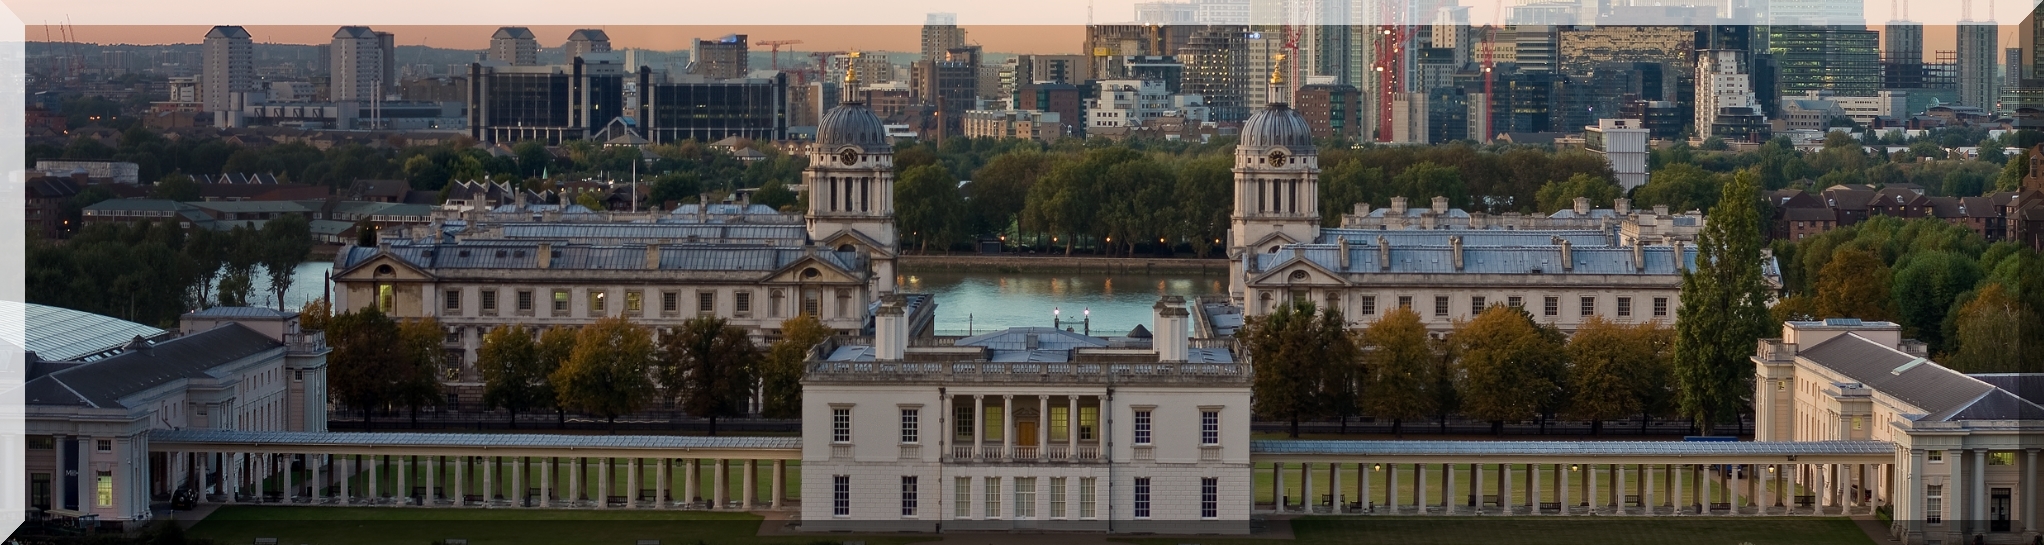 University of Greenwich - London